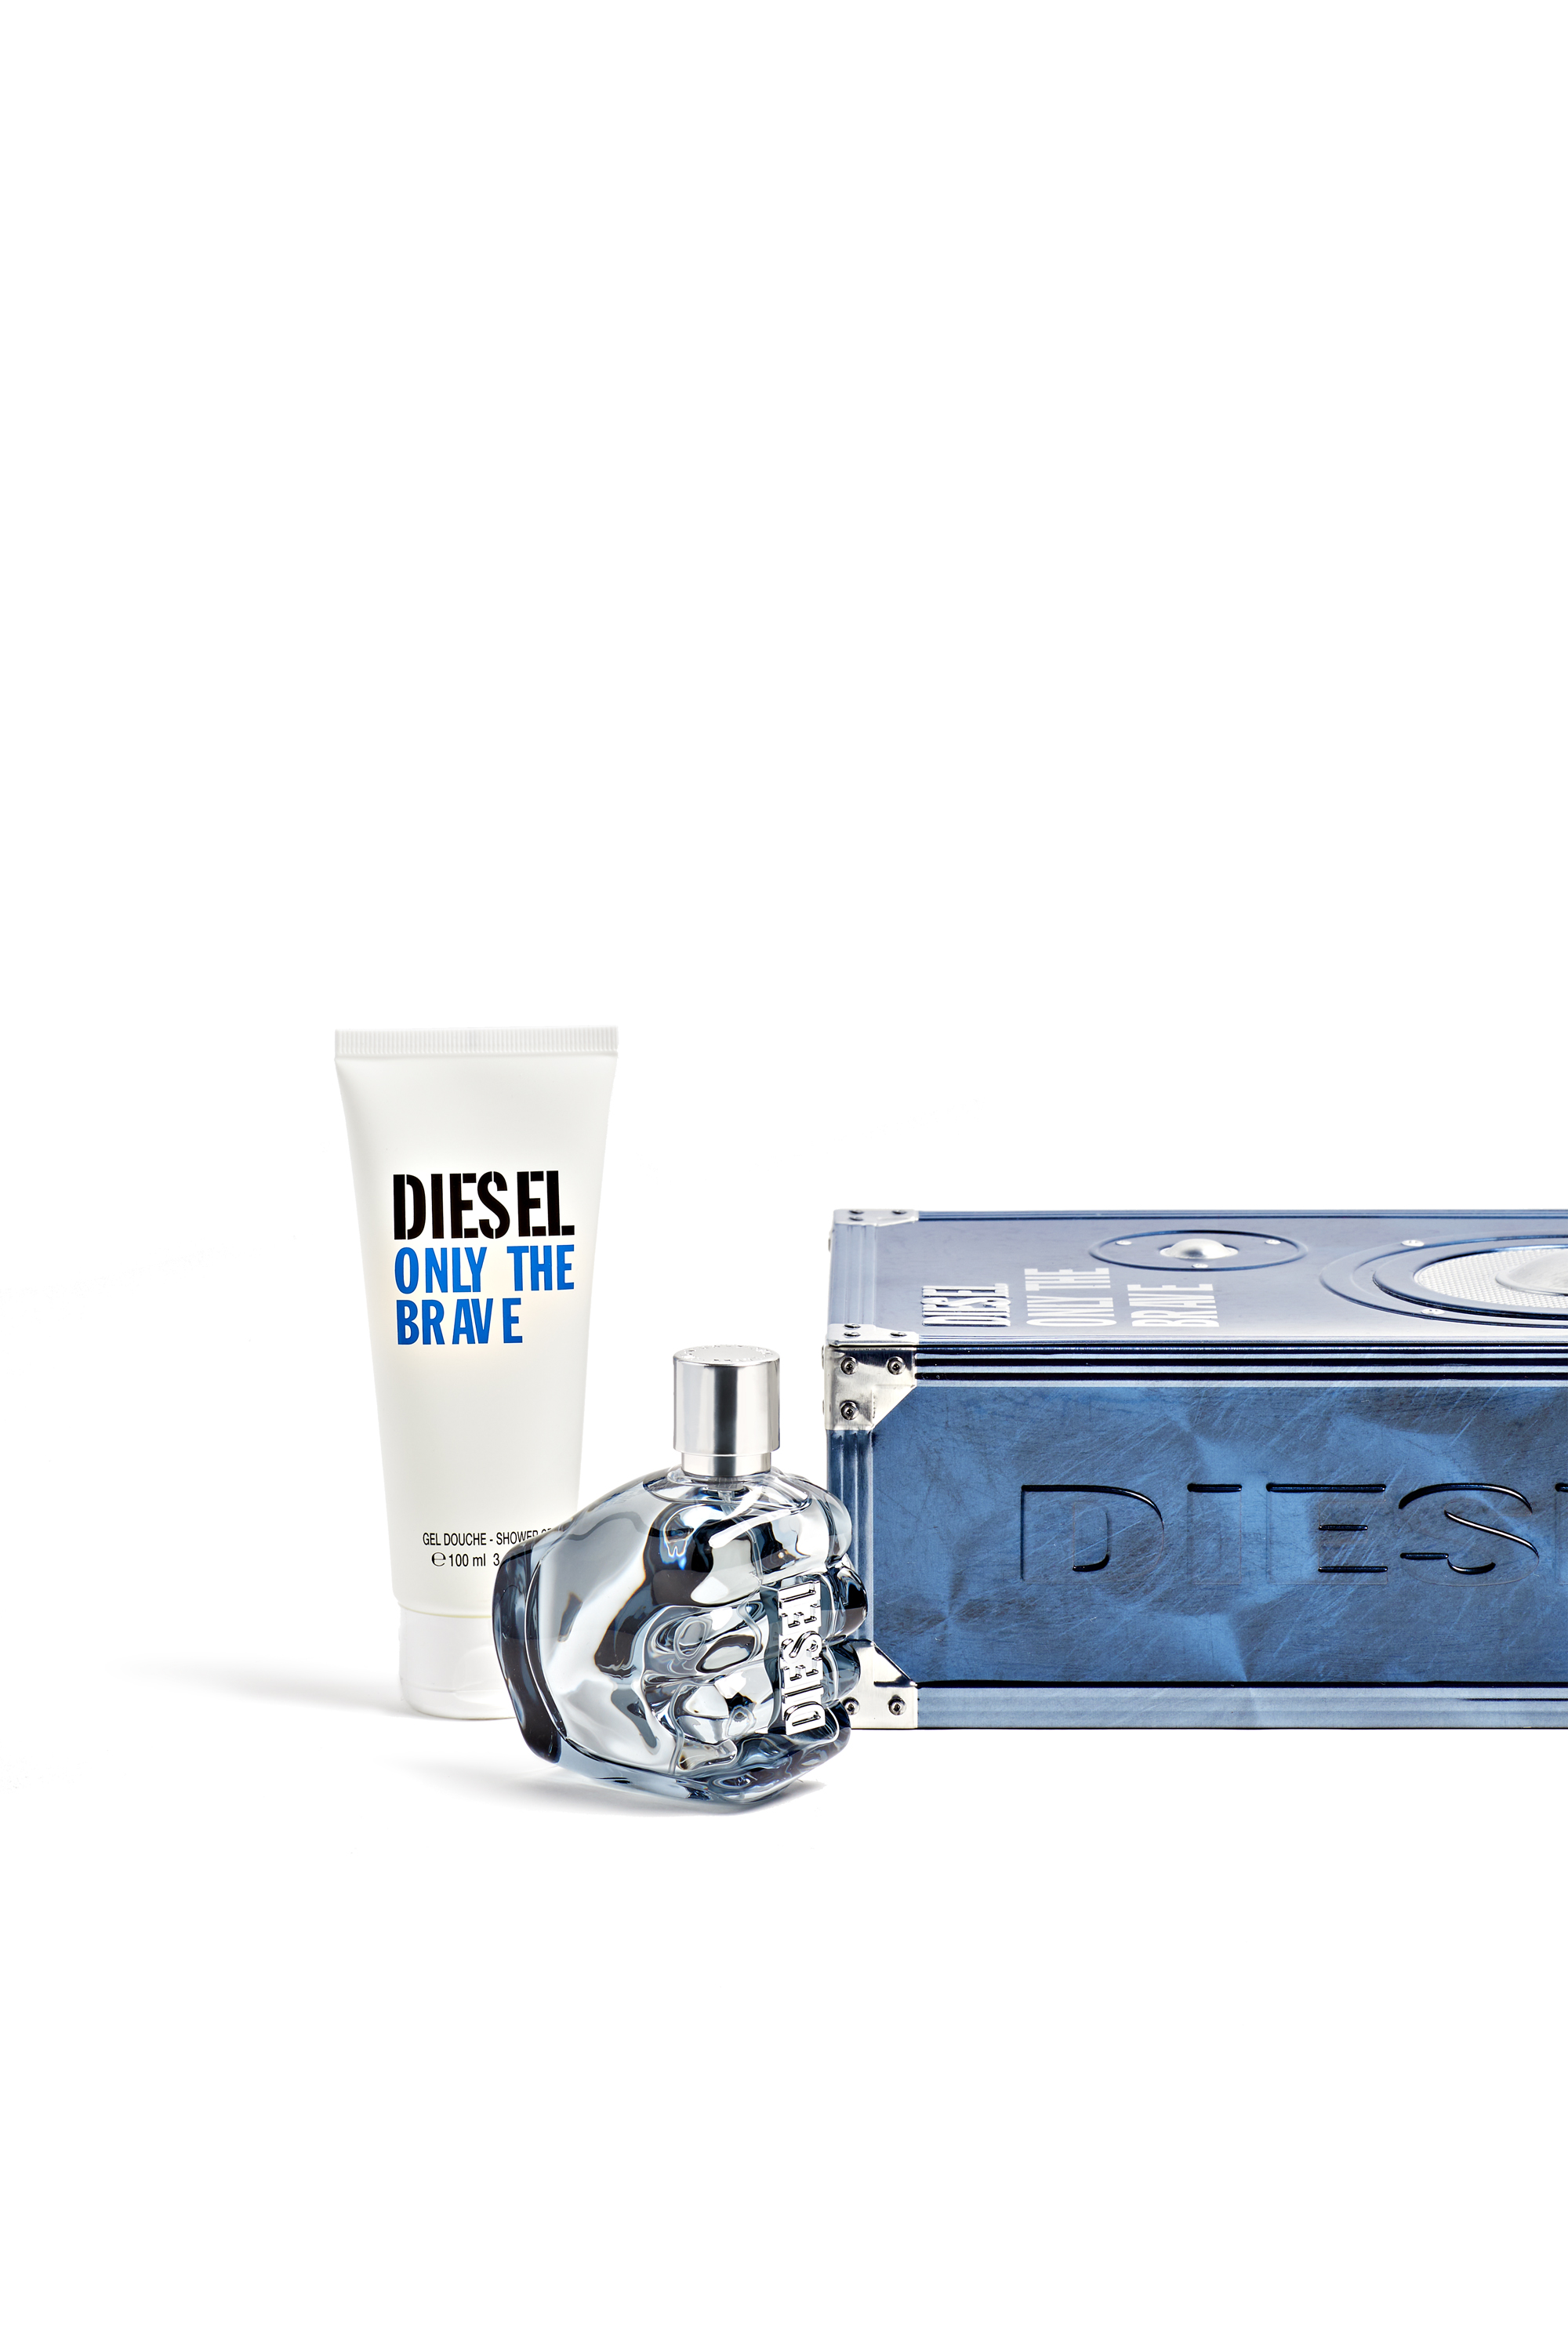 Diesel - ONLY THE BRAVE 75 ML PREMIUM BOX,  - Image 1